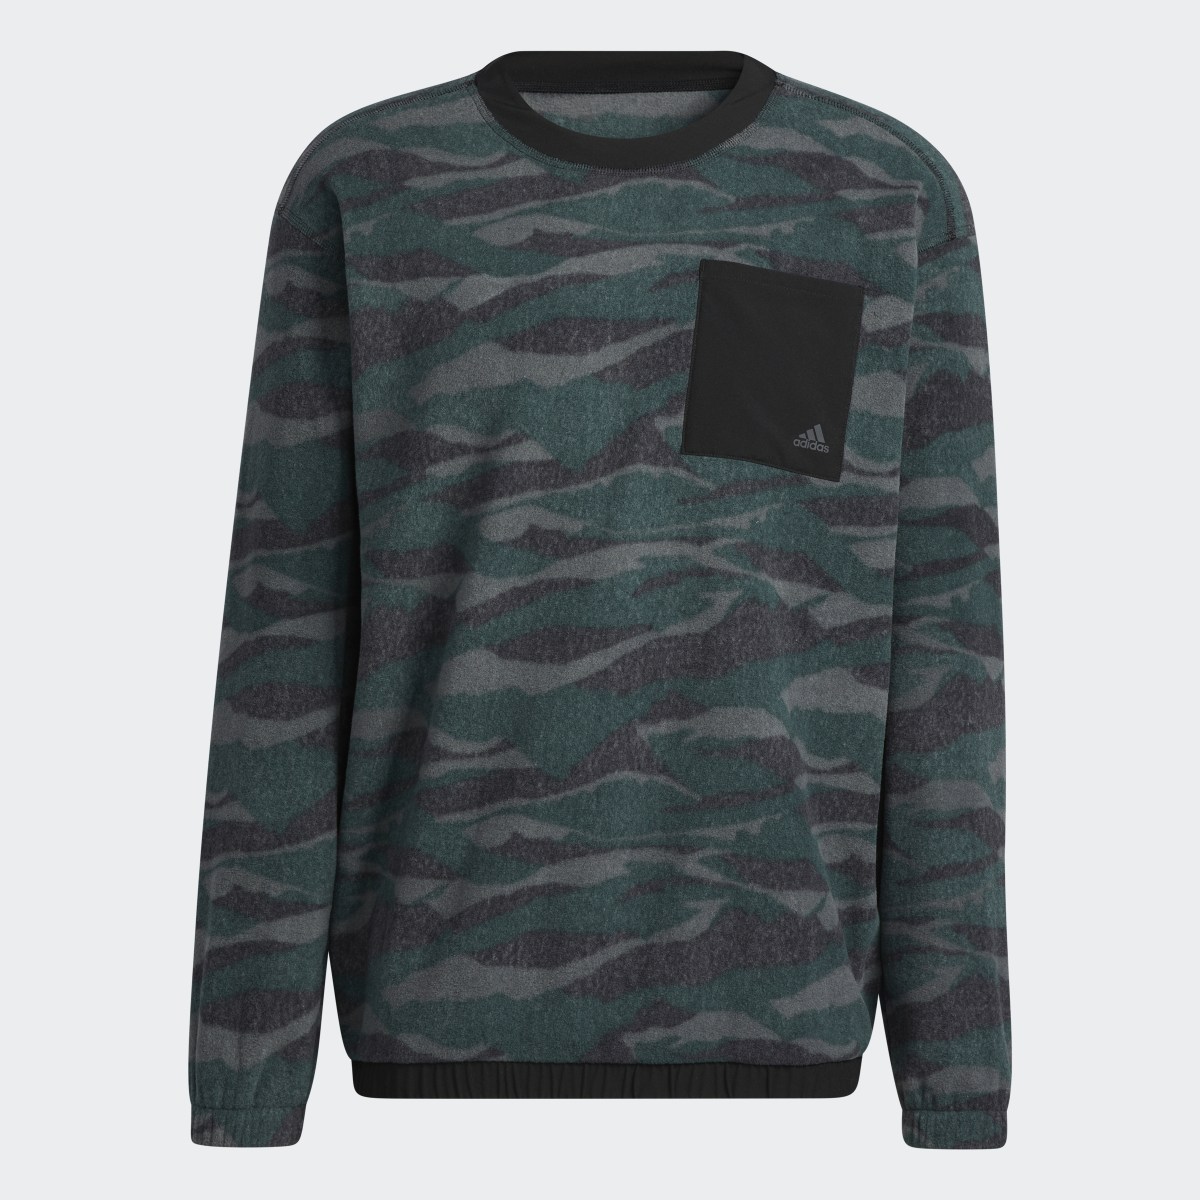 Adidas Texture-Print Crew Sweatshirt. 5